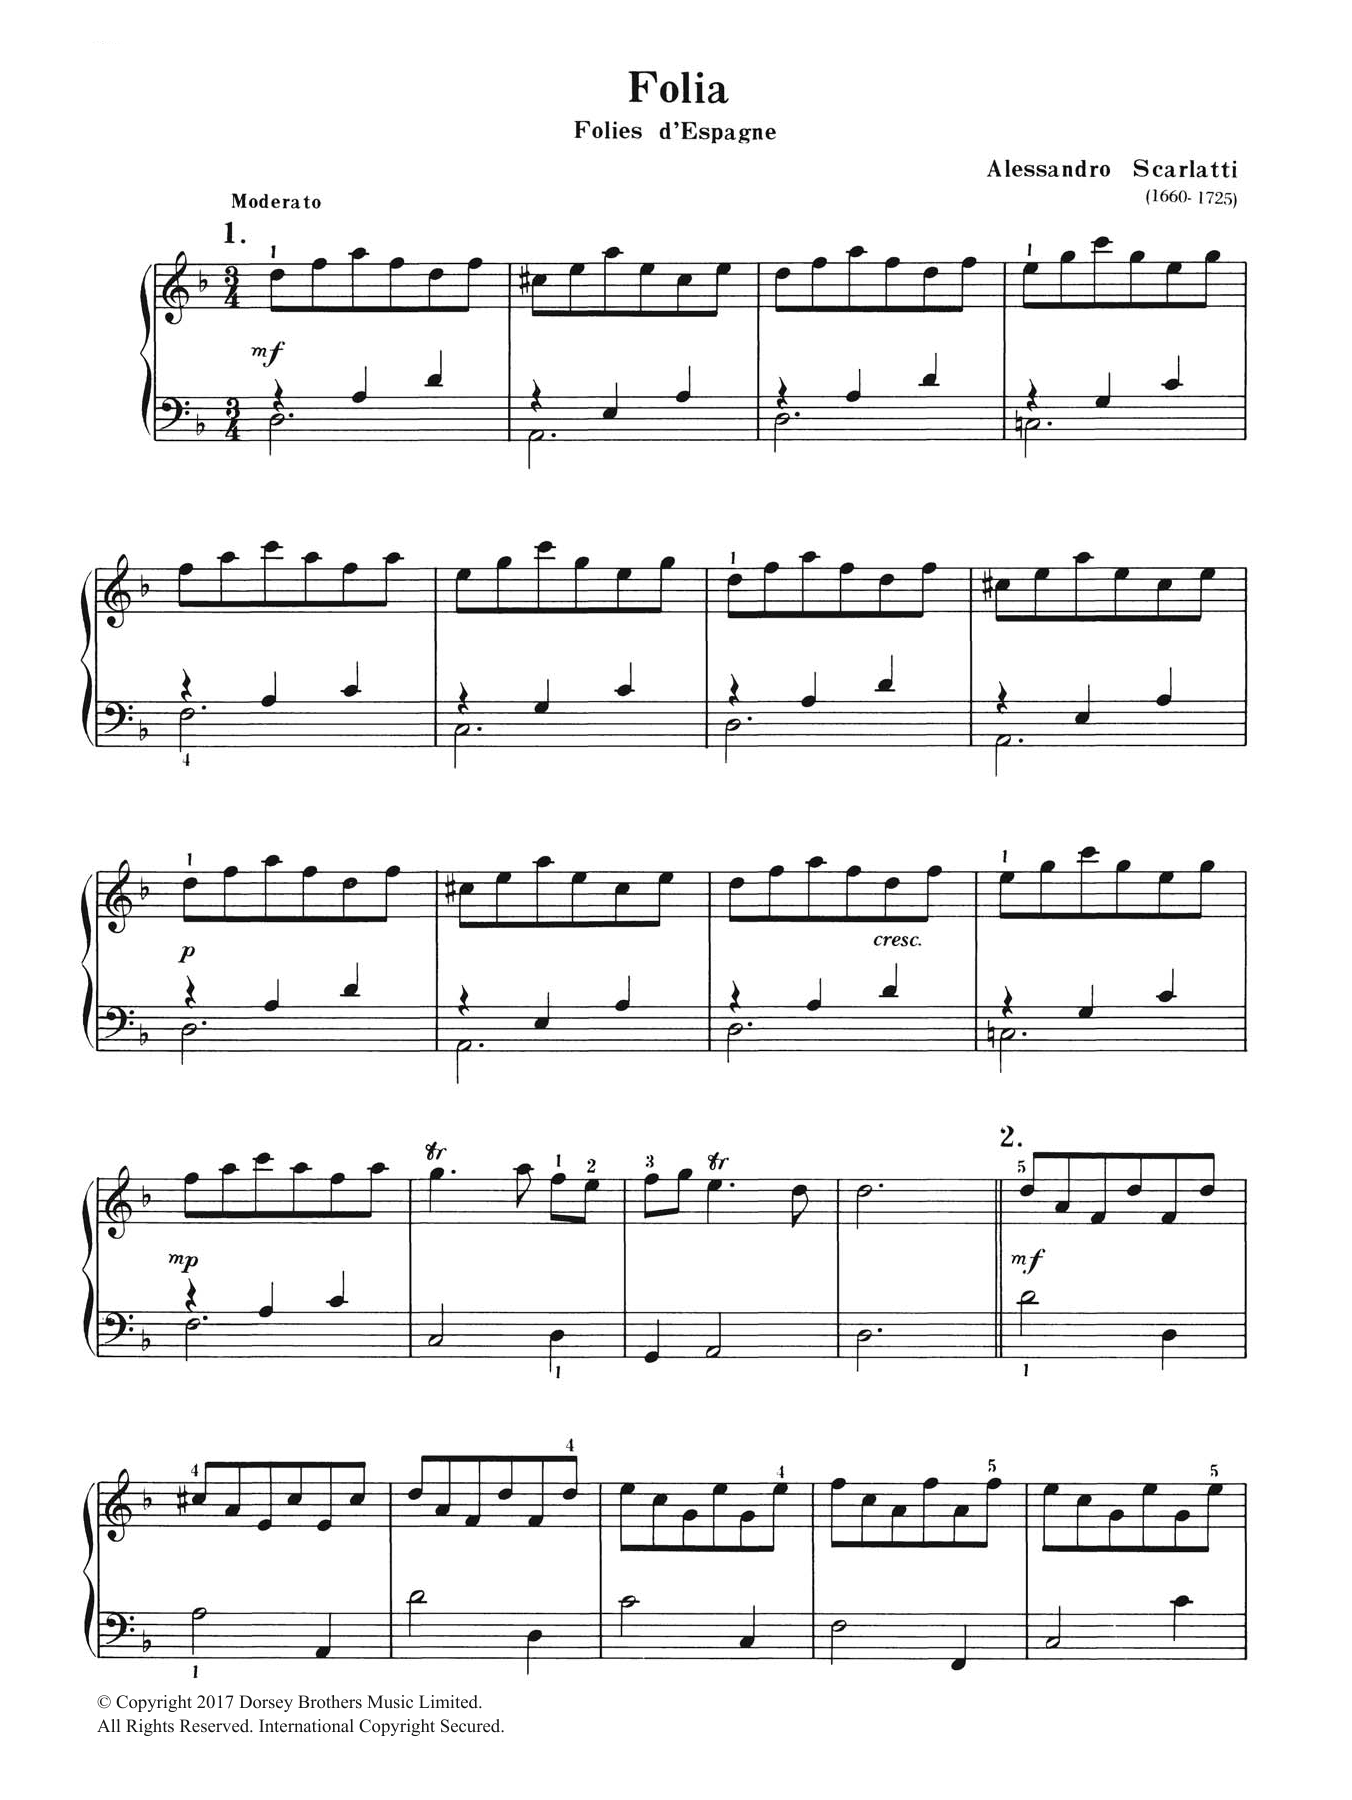 Alessandro Scarlatti Folia Sheet Music Notes & Chords for Piano - Download or Print PDF